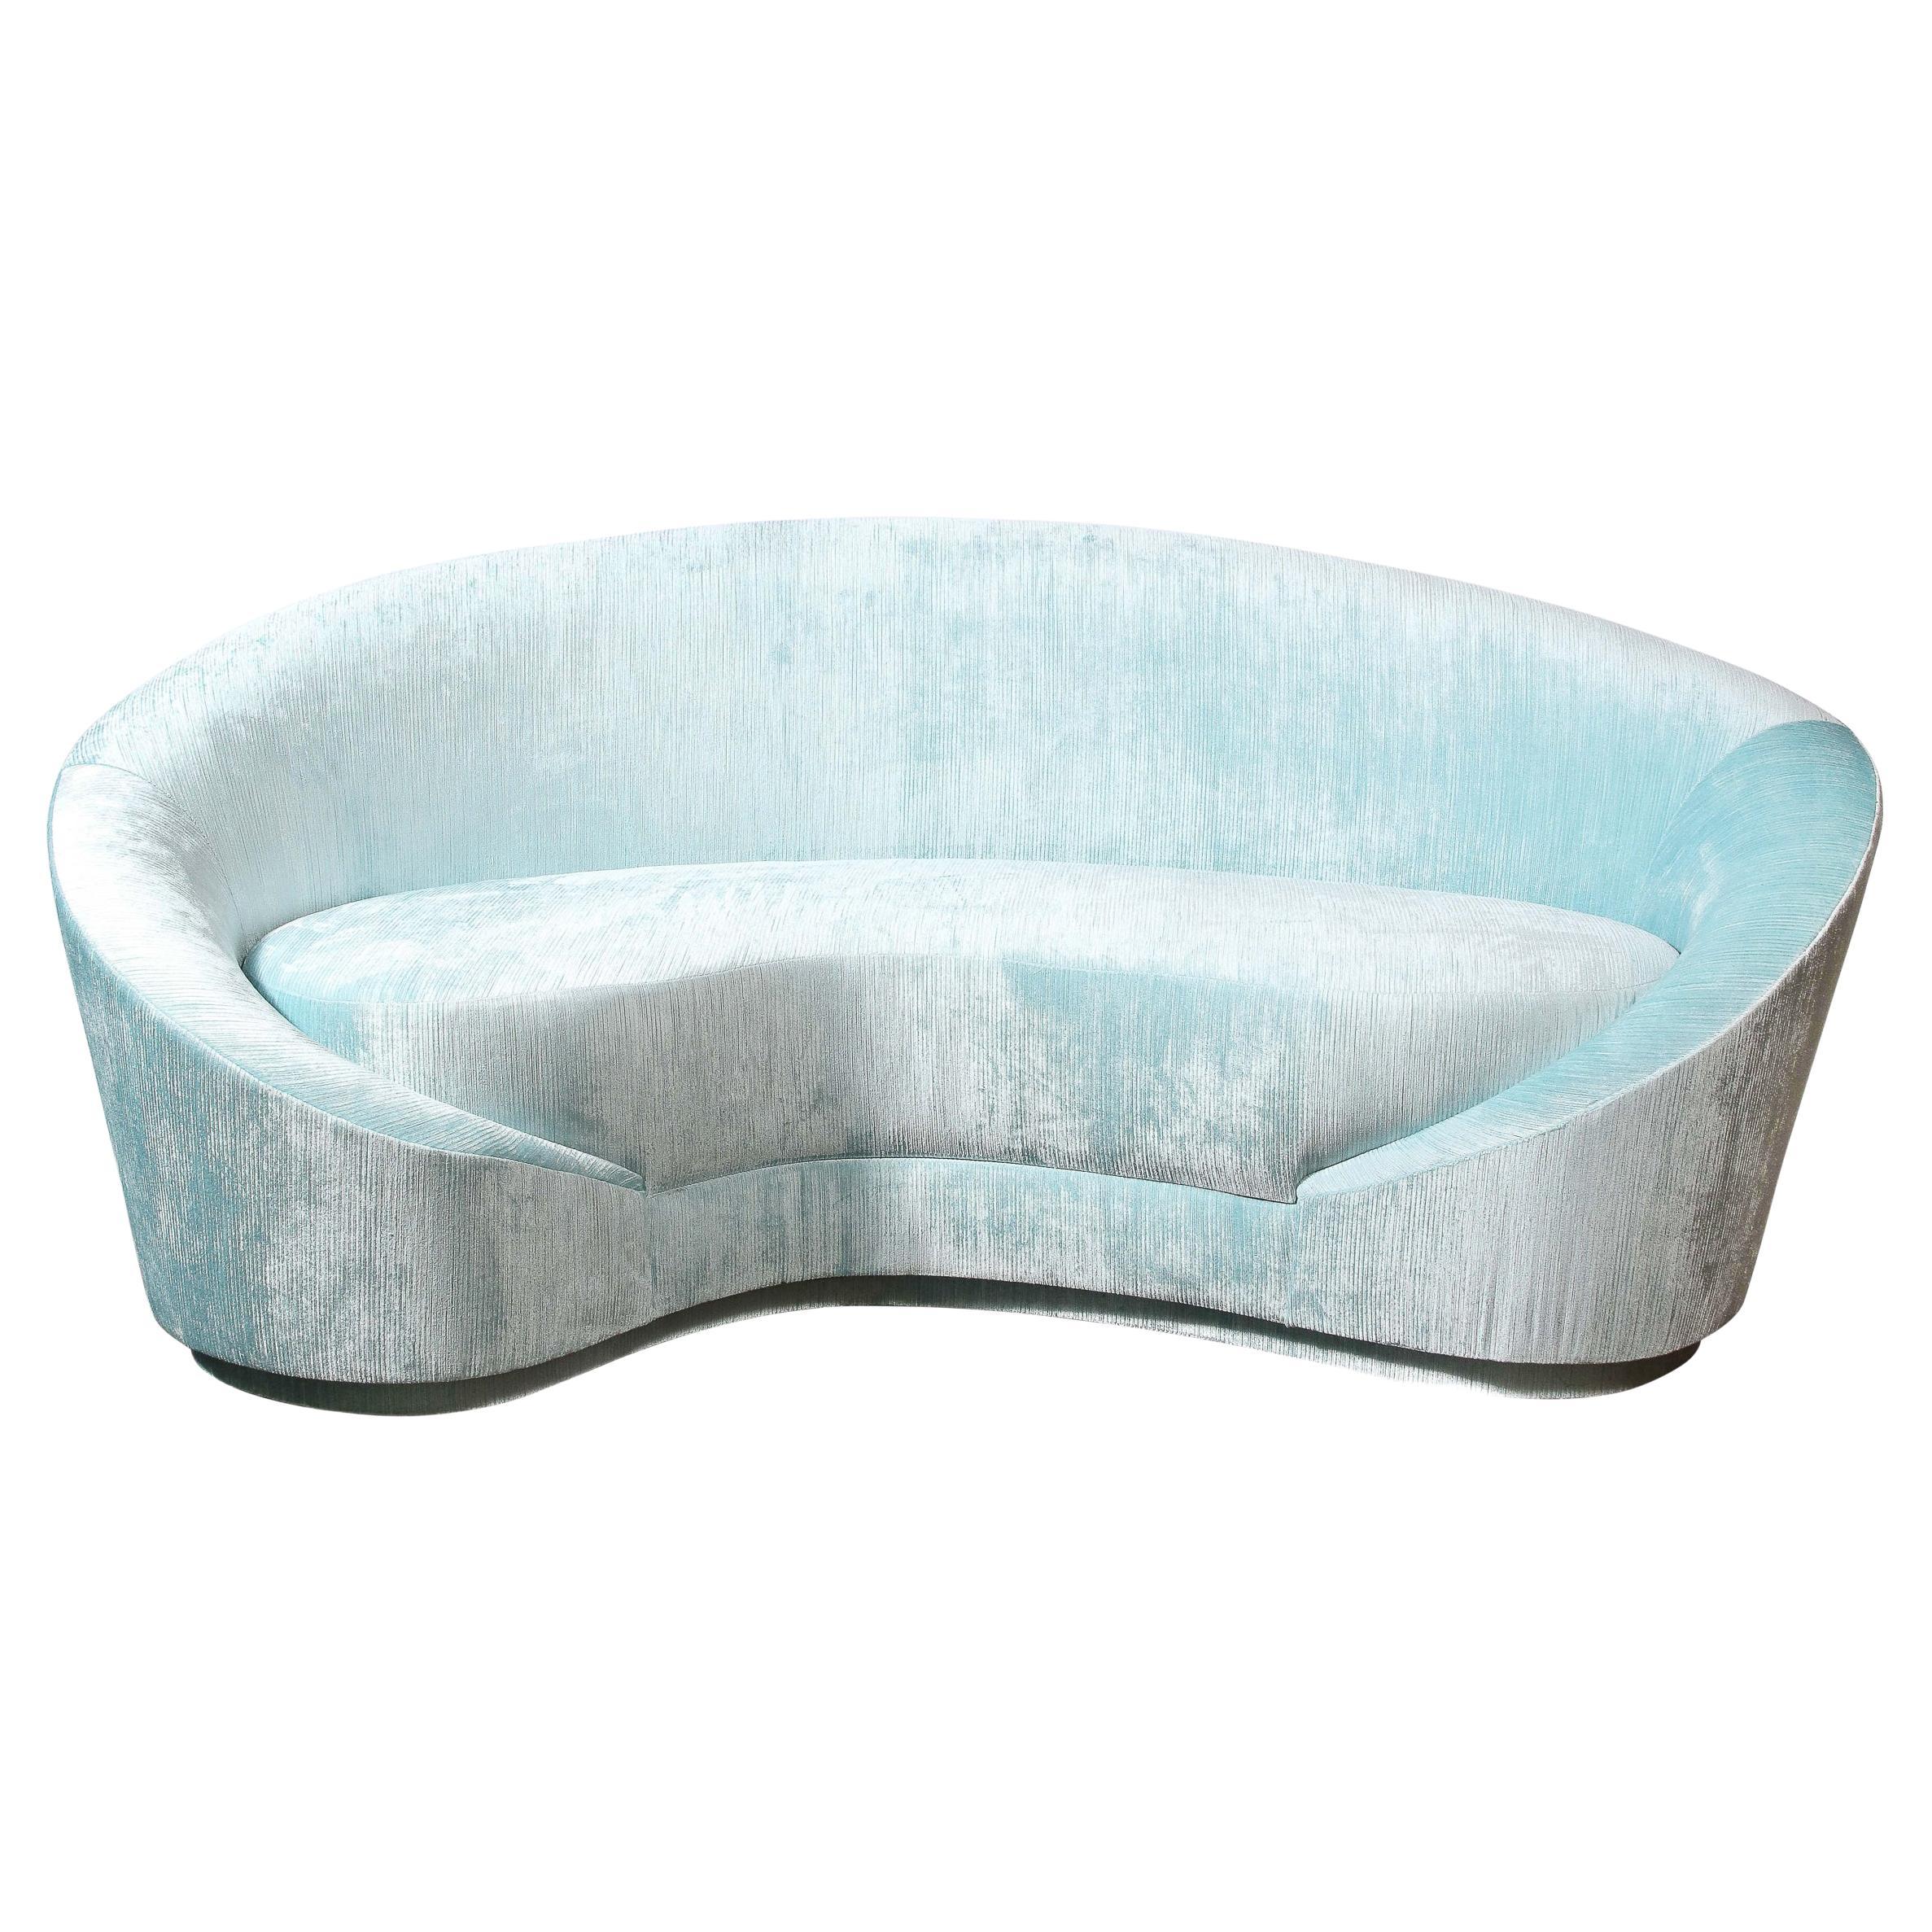 1940s Style Modernist Custom Sweeping Curved Sofa in Aquamarine Velvet For Sale